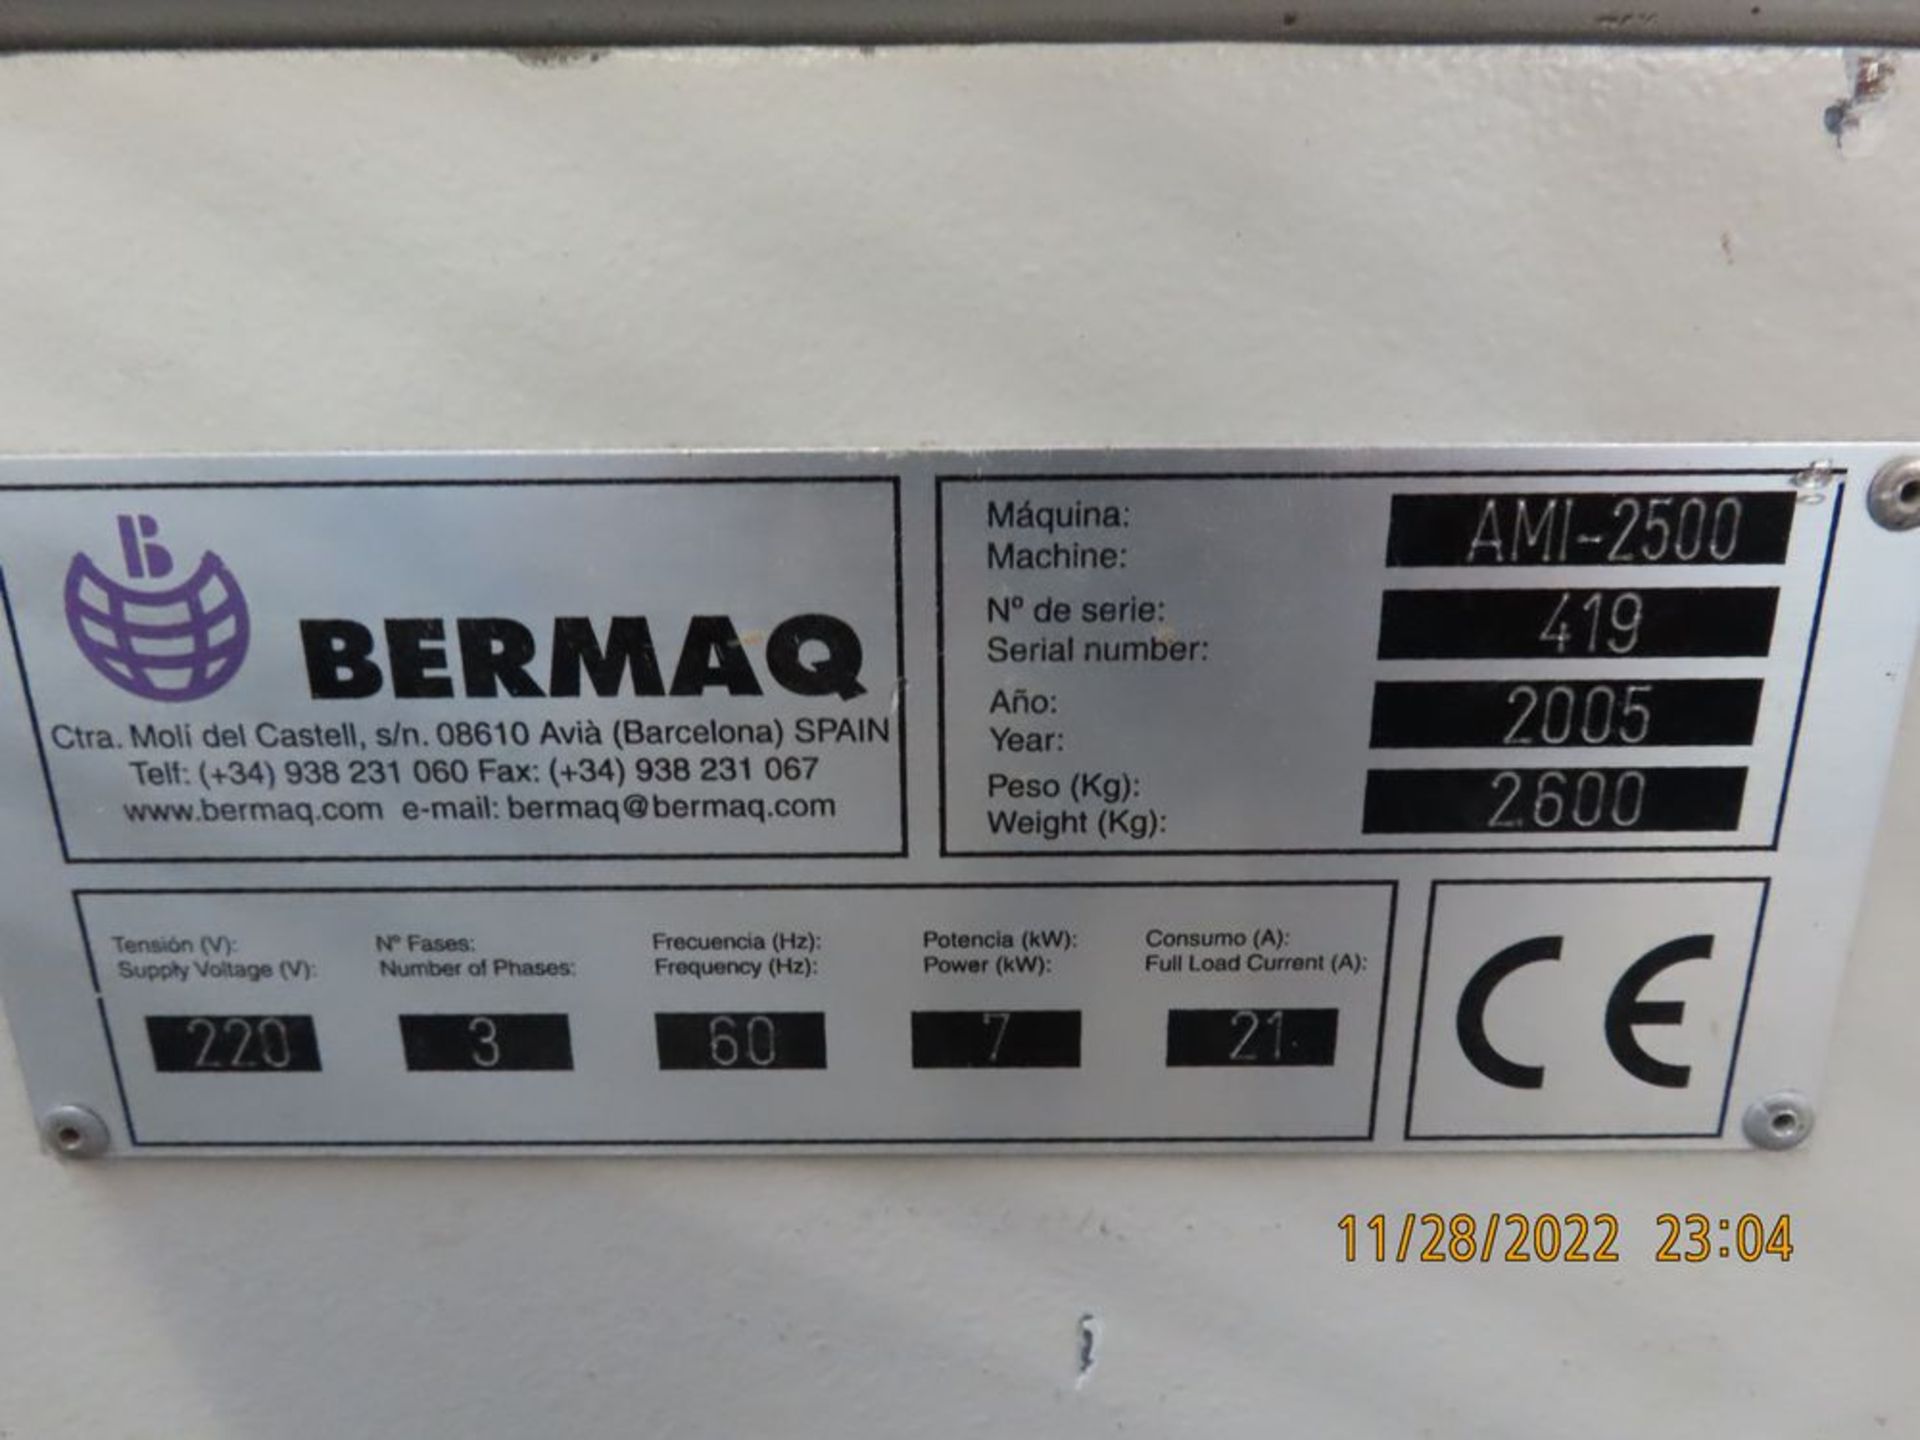 (2005) Bermaq mod. AMI-2-500, 8' Acrylic Edge Polisher; S/N 419 (LOCATION: 2226 Castle Harbour - Image 7 of 7